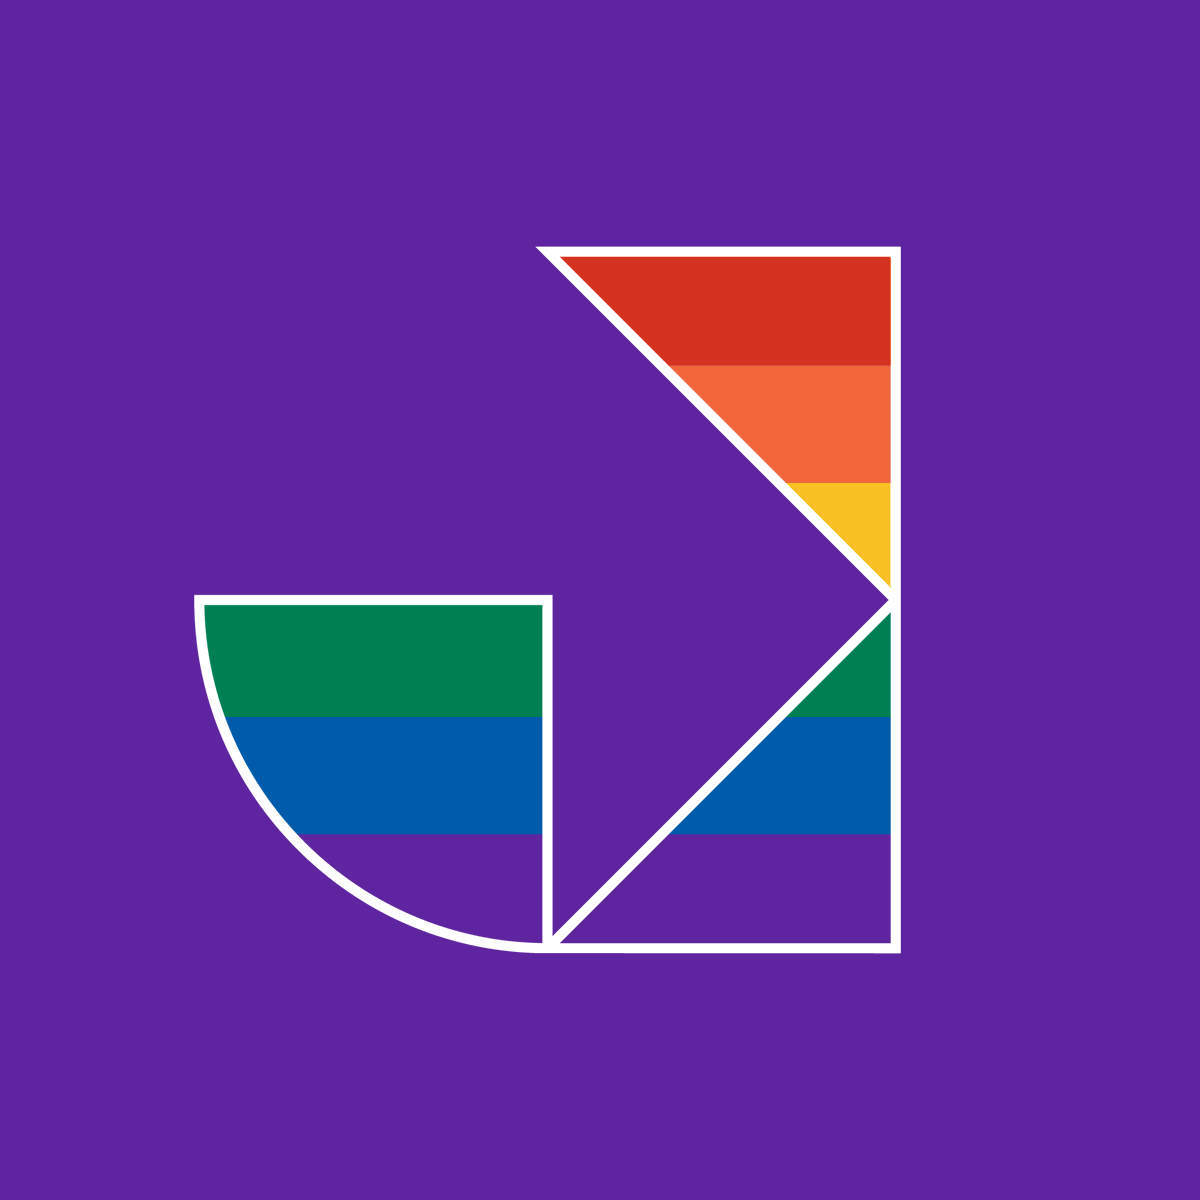 🟪🌈✨#PrideMonth: We come together to #sharelove & build a more #inclusiveworld!

#JOIST #JOISTInnovationPark #InnovationPark #loveislove